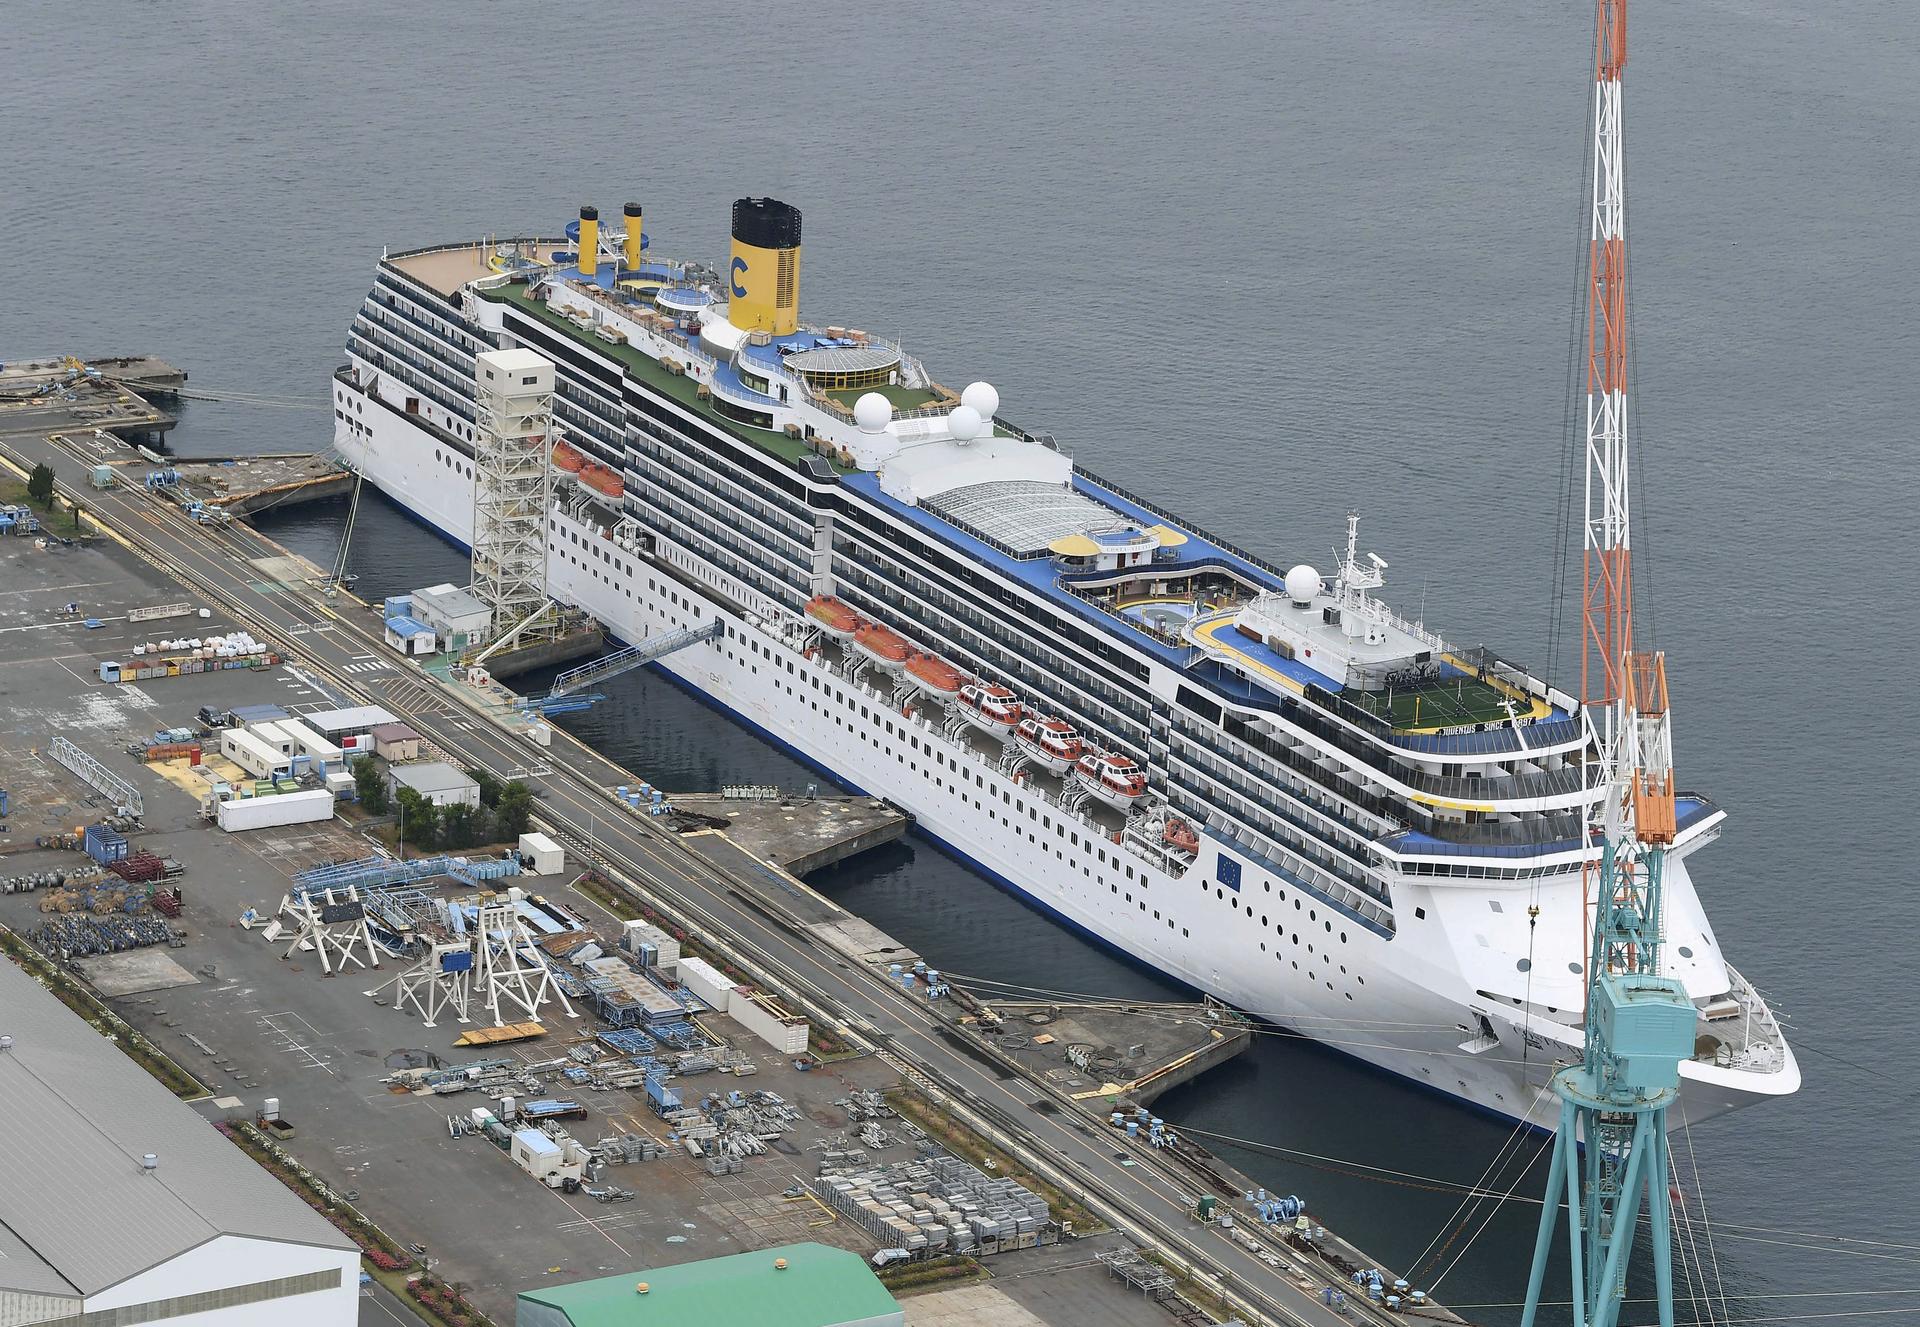 Japan's Nagasaki confirms 33 coronavirus cases on cruise ship docked for repairs